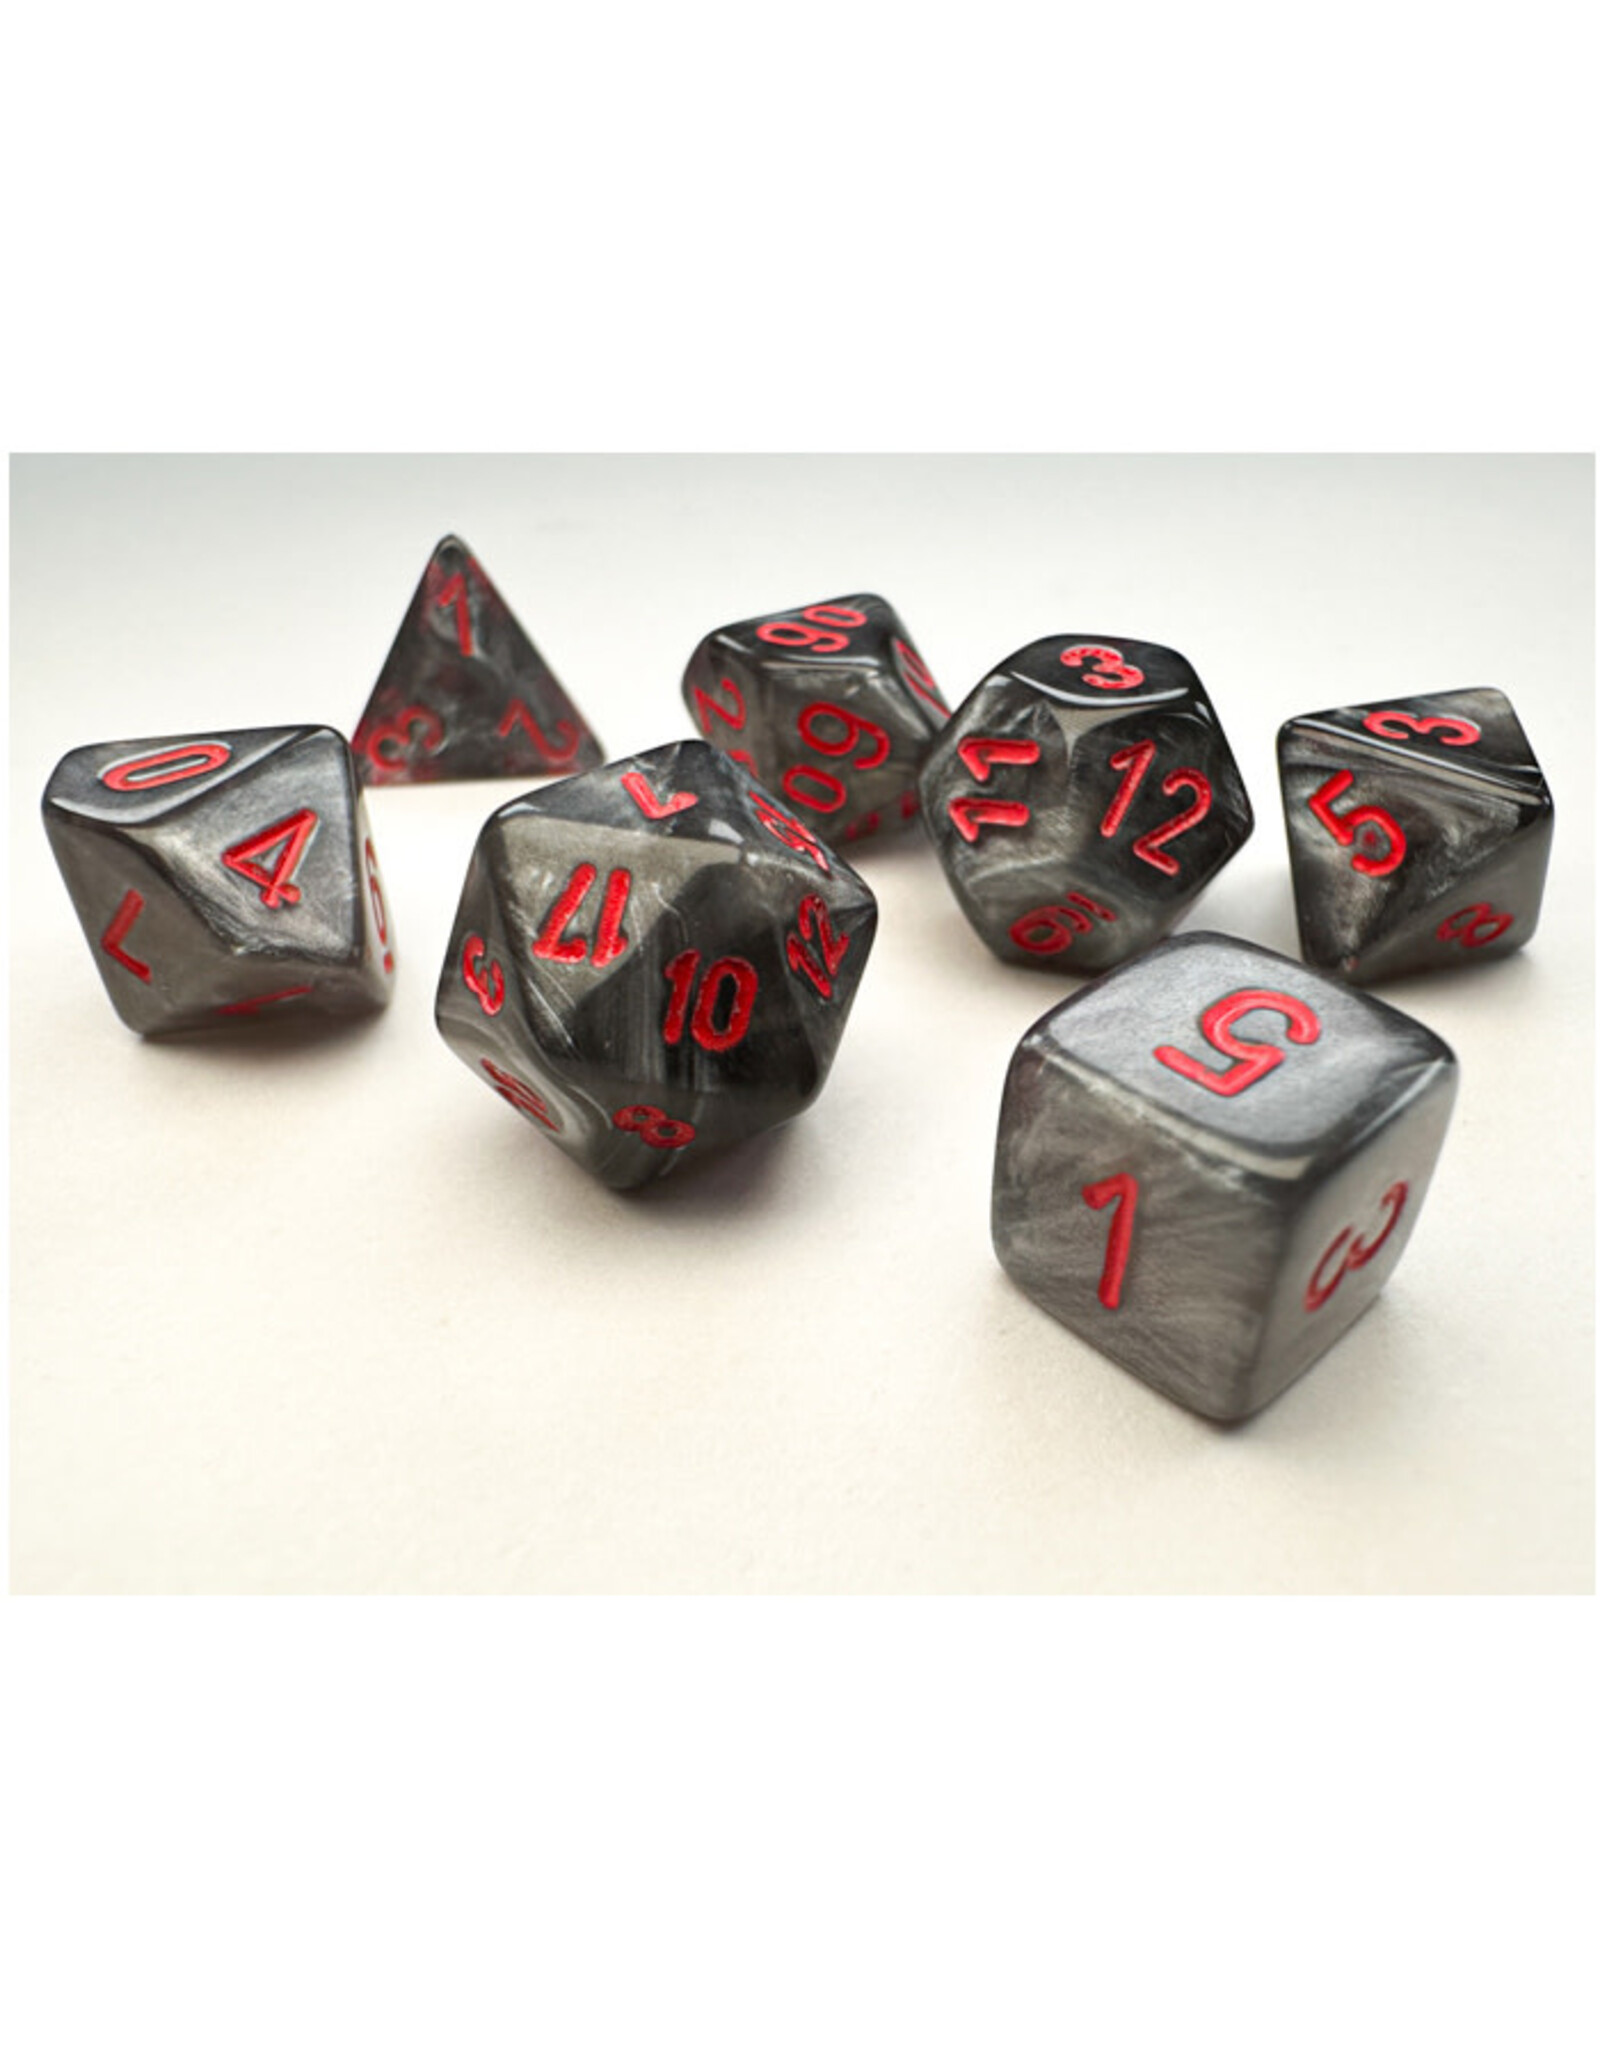 Chessex Mini Velvet Black with Red poly 7 dice set